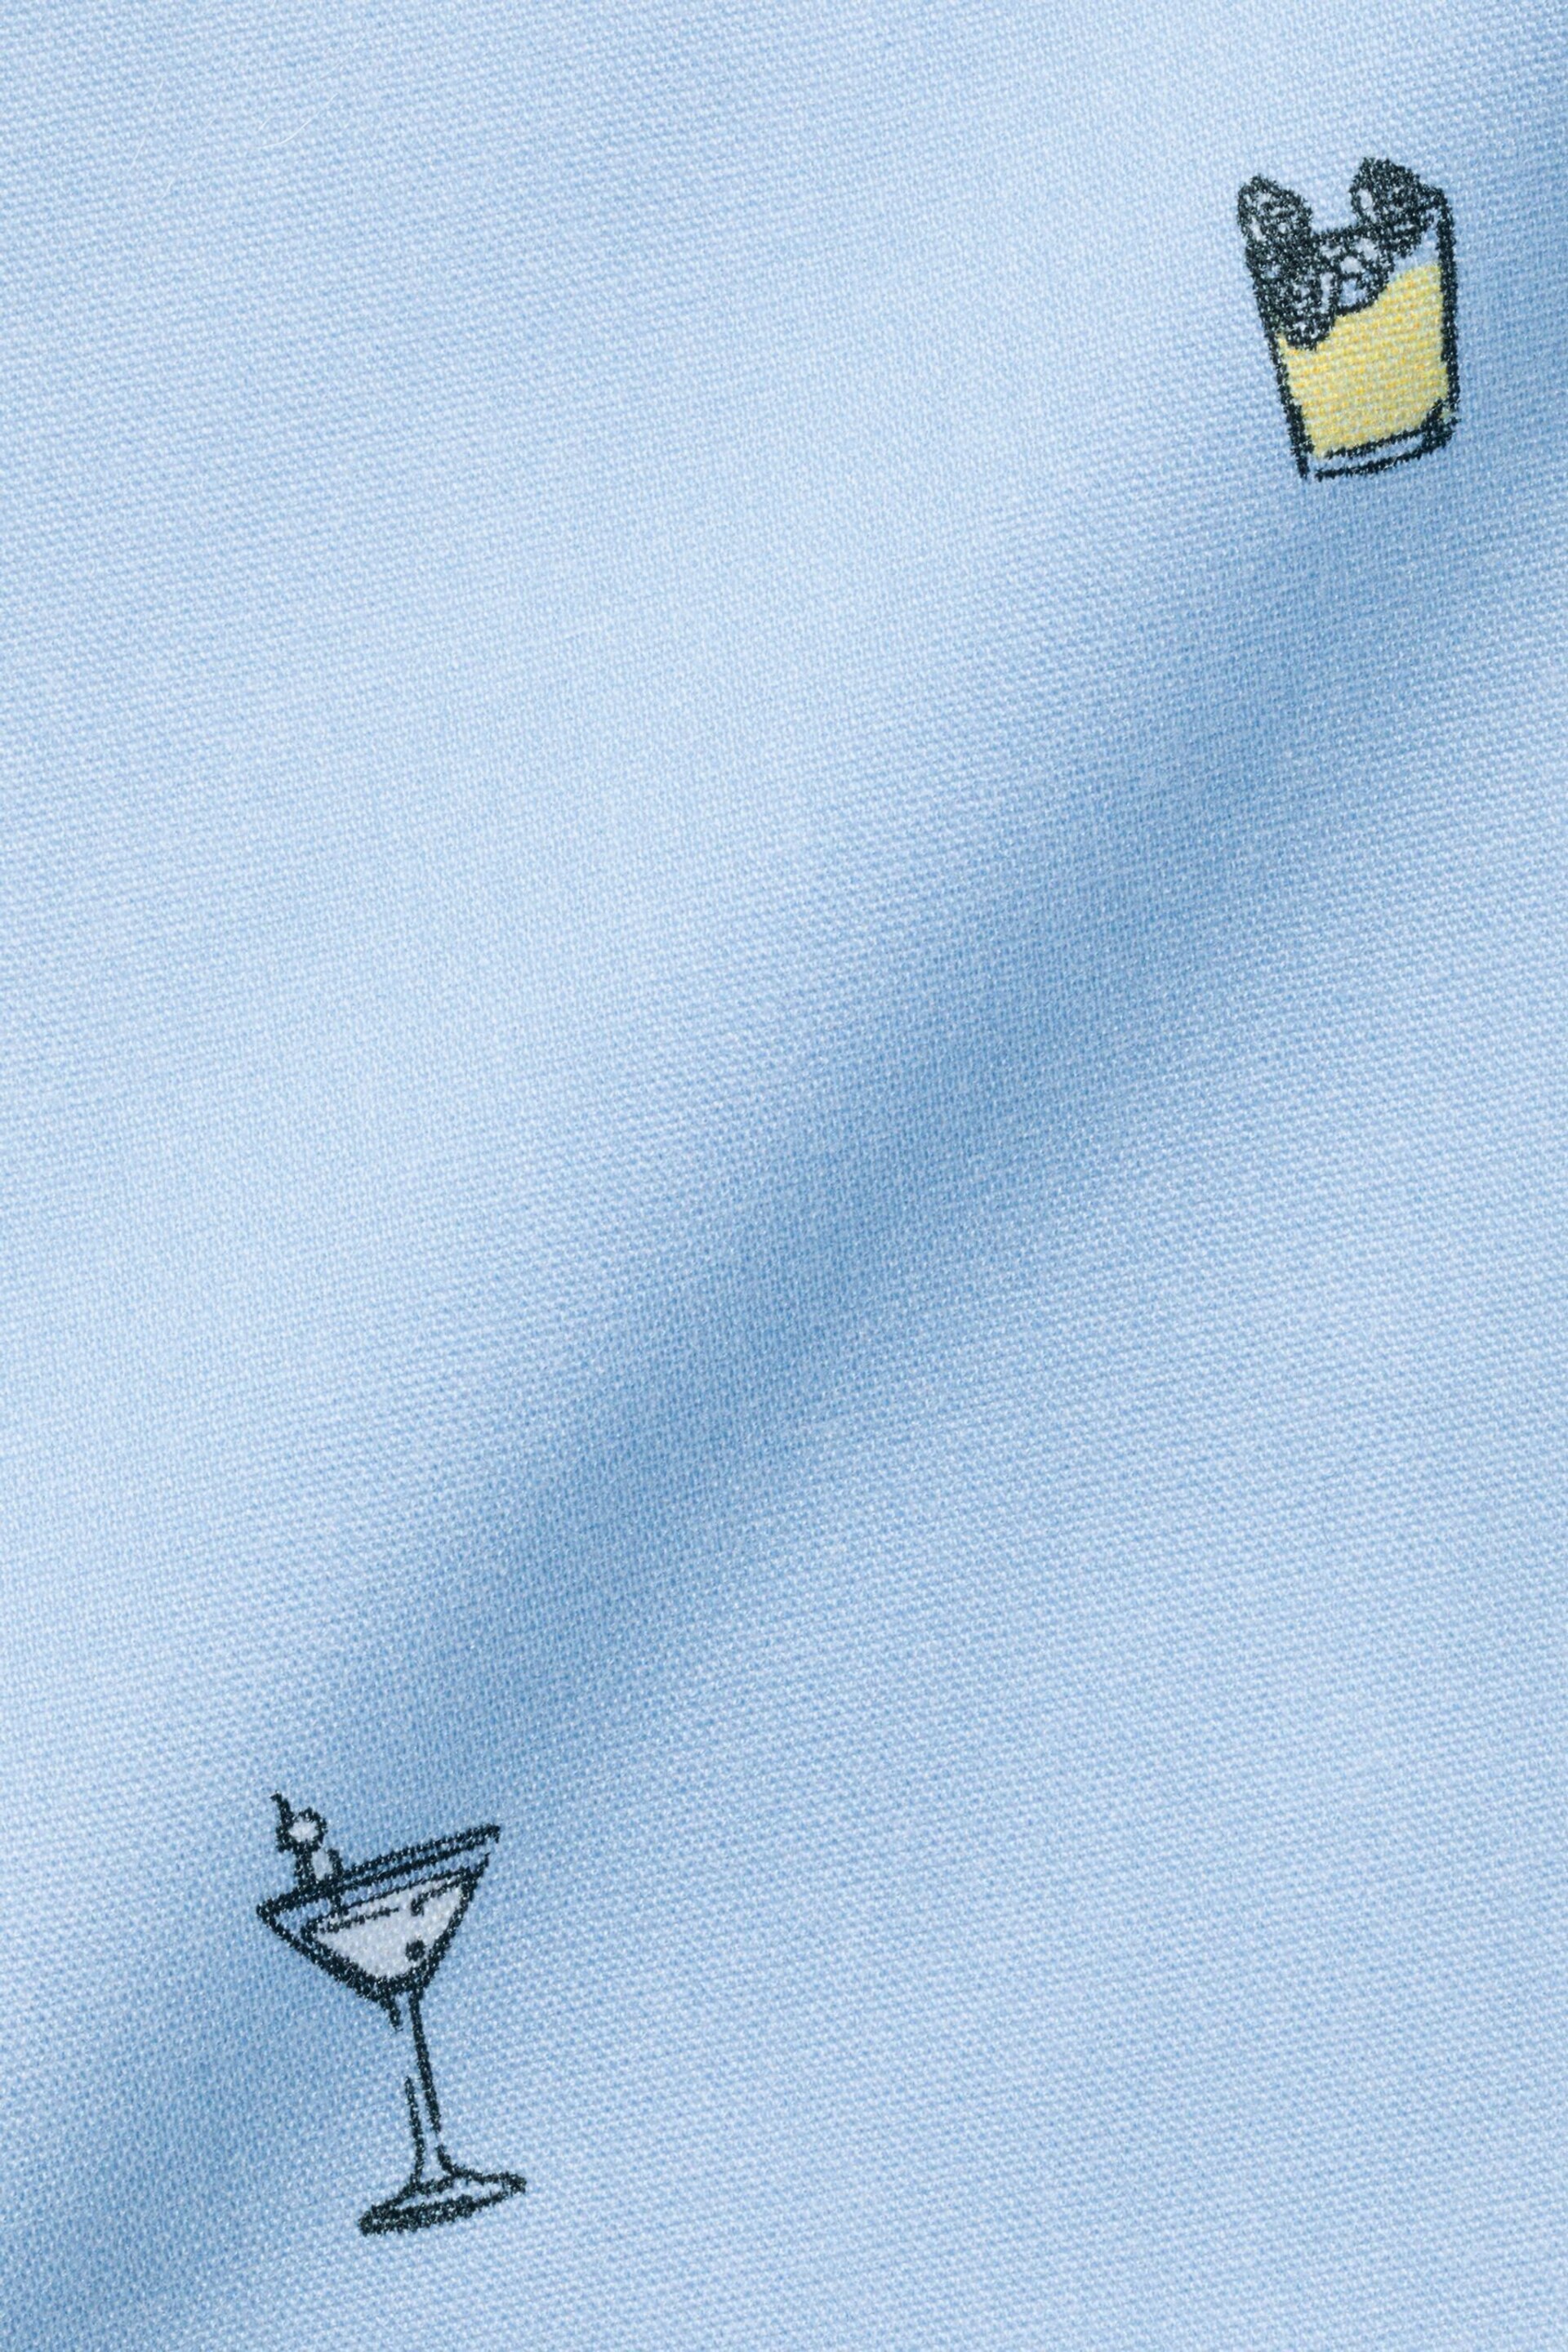 Charles Tyrwhitt Blue Slim Fit Non Iron Short Sleeve Cocktail Print Shirt - Image 5 of 5